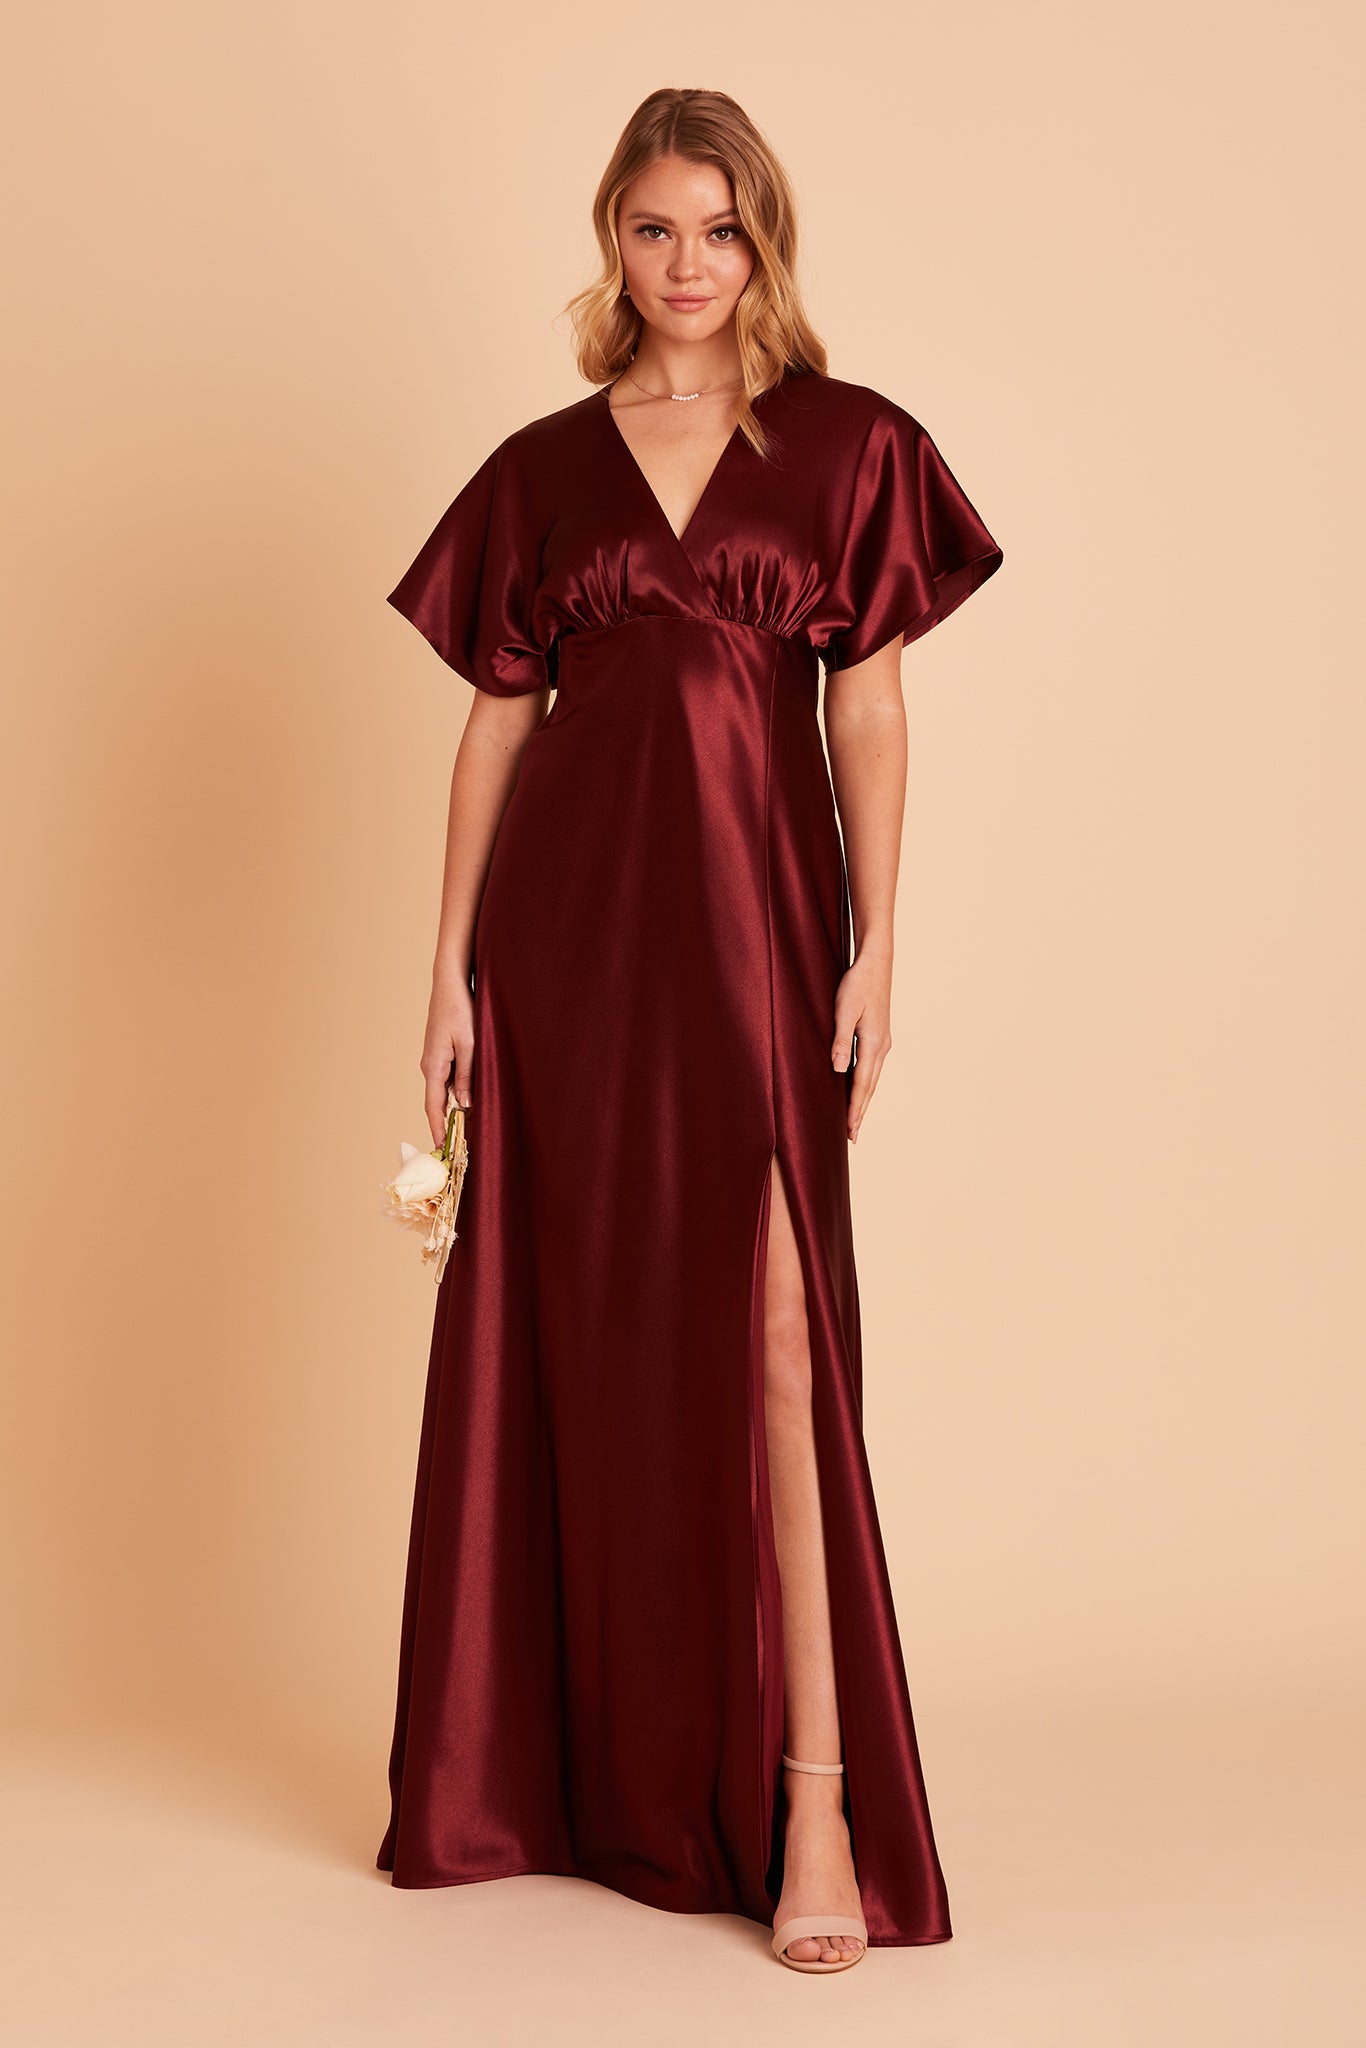 Birdy | Satin Dress in Jesse Grey Cabernet Bridesmaid